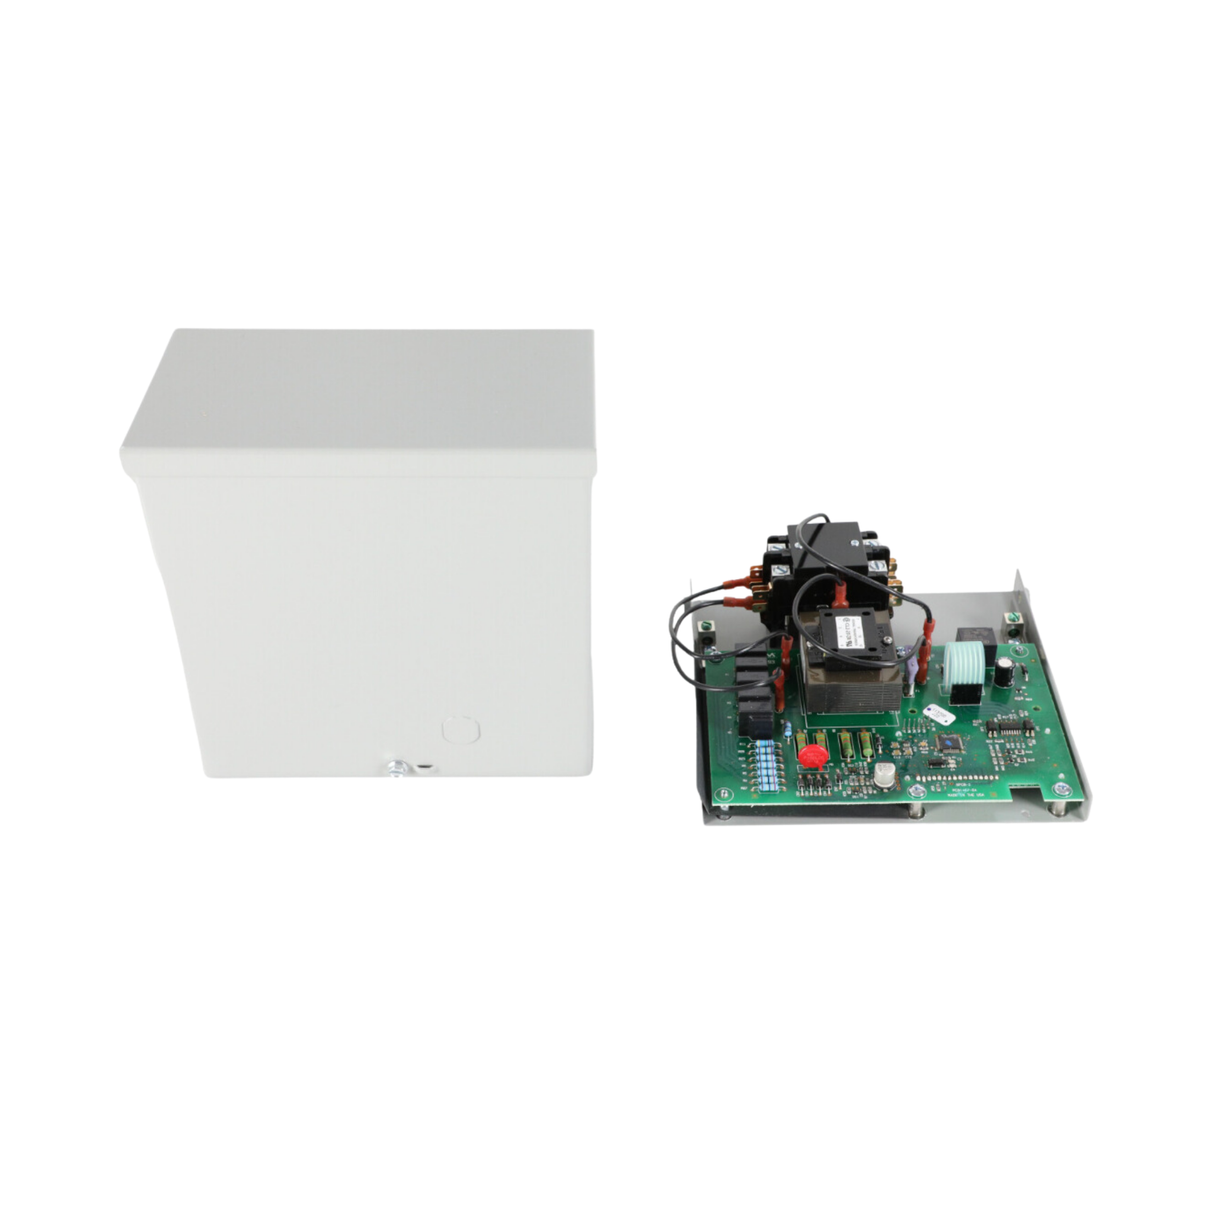 ICM Controls ICM493 200-240VAC, 50-60 Hertz, Single Phase Line Voltage Monitor with Surge Supression